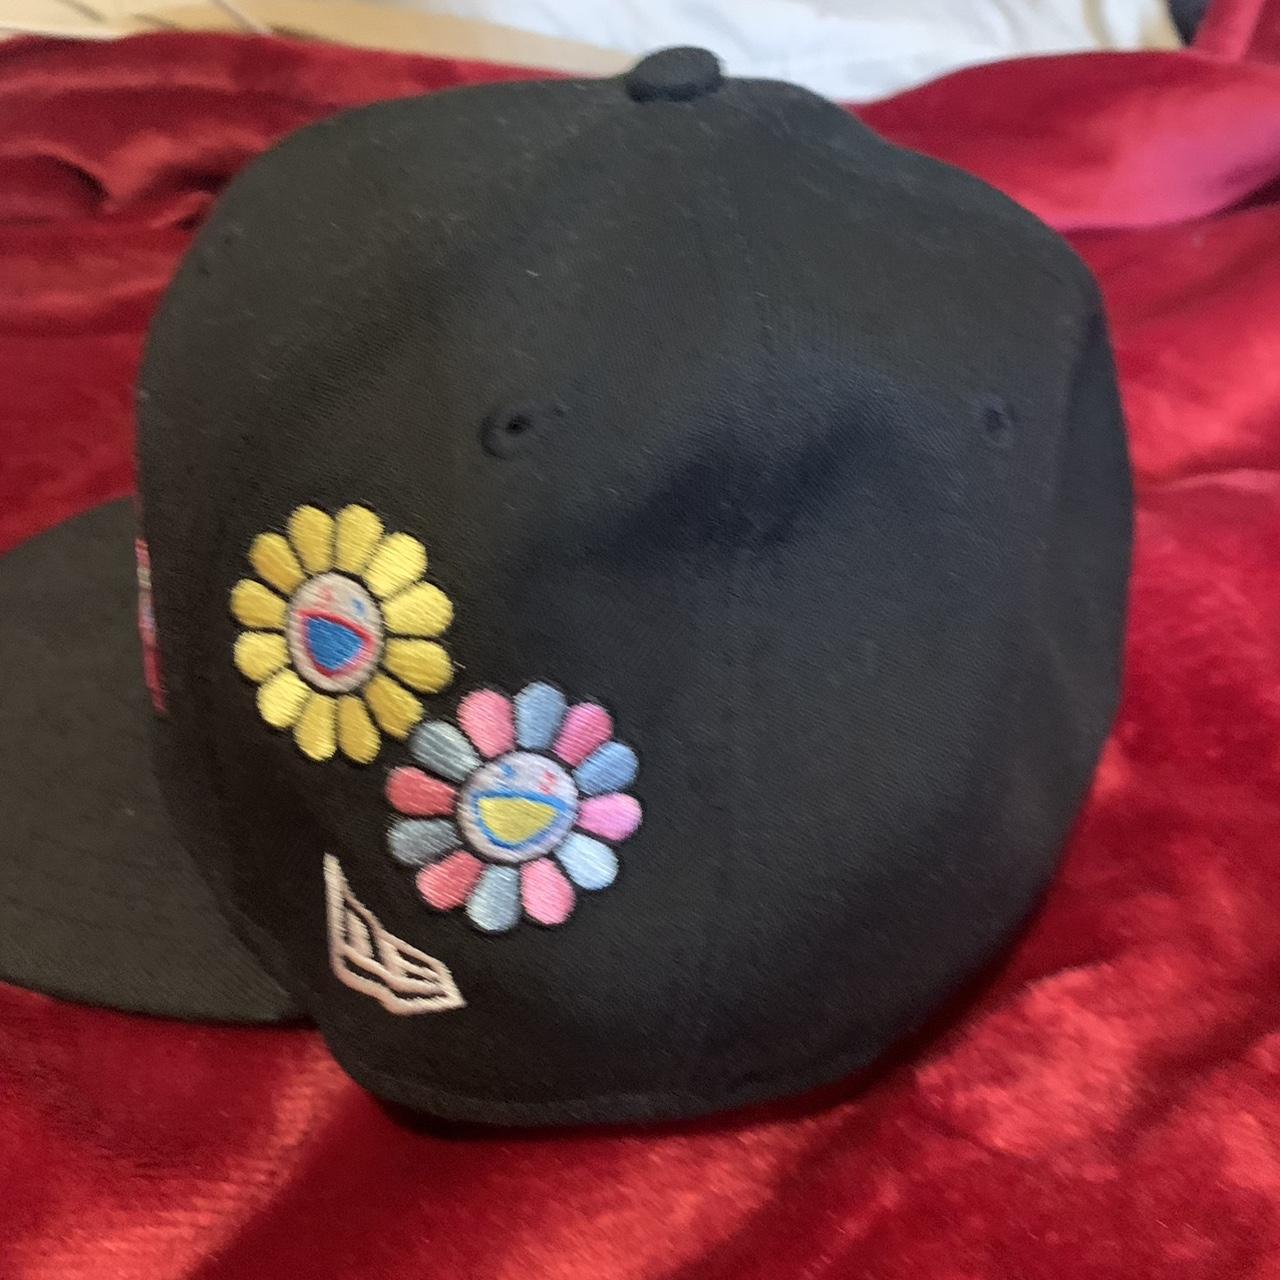 NEW ERA MURAKAMI MULTI FLOWER LOGO FITTED CAP